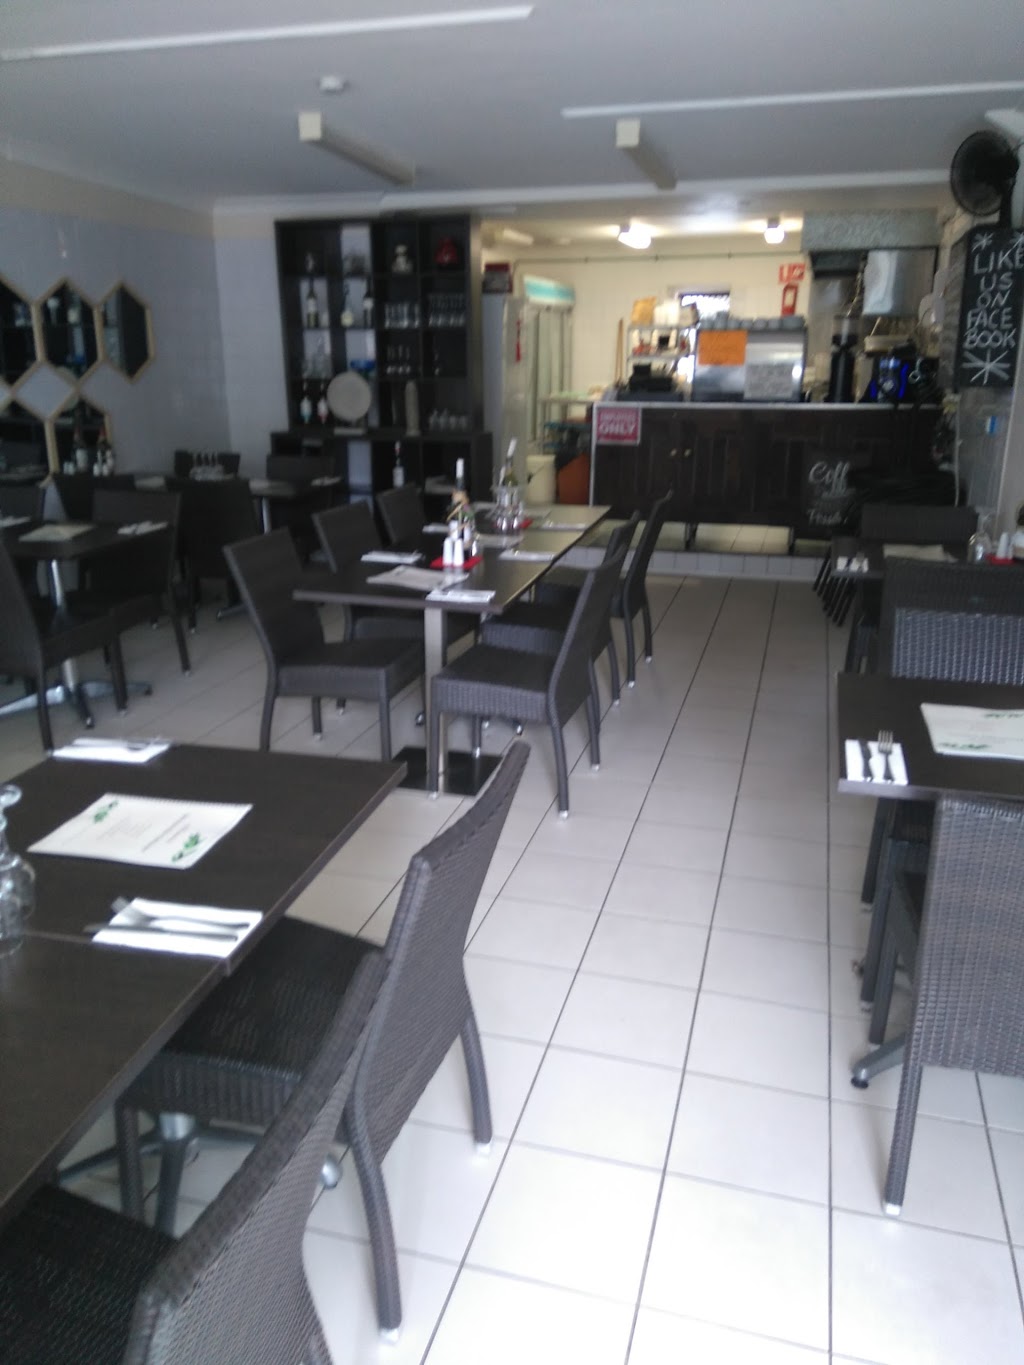 Barrozza Italian Restaurant | restaurant | 1/110 Wyong Rd, Killarney Vale NSW 2261, Australia | 0243399389 OR +61 2 4339 9389